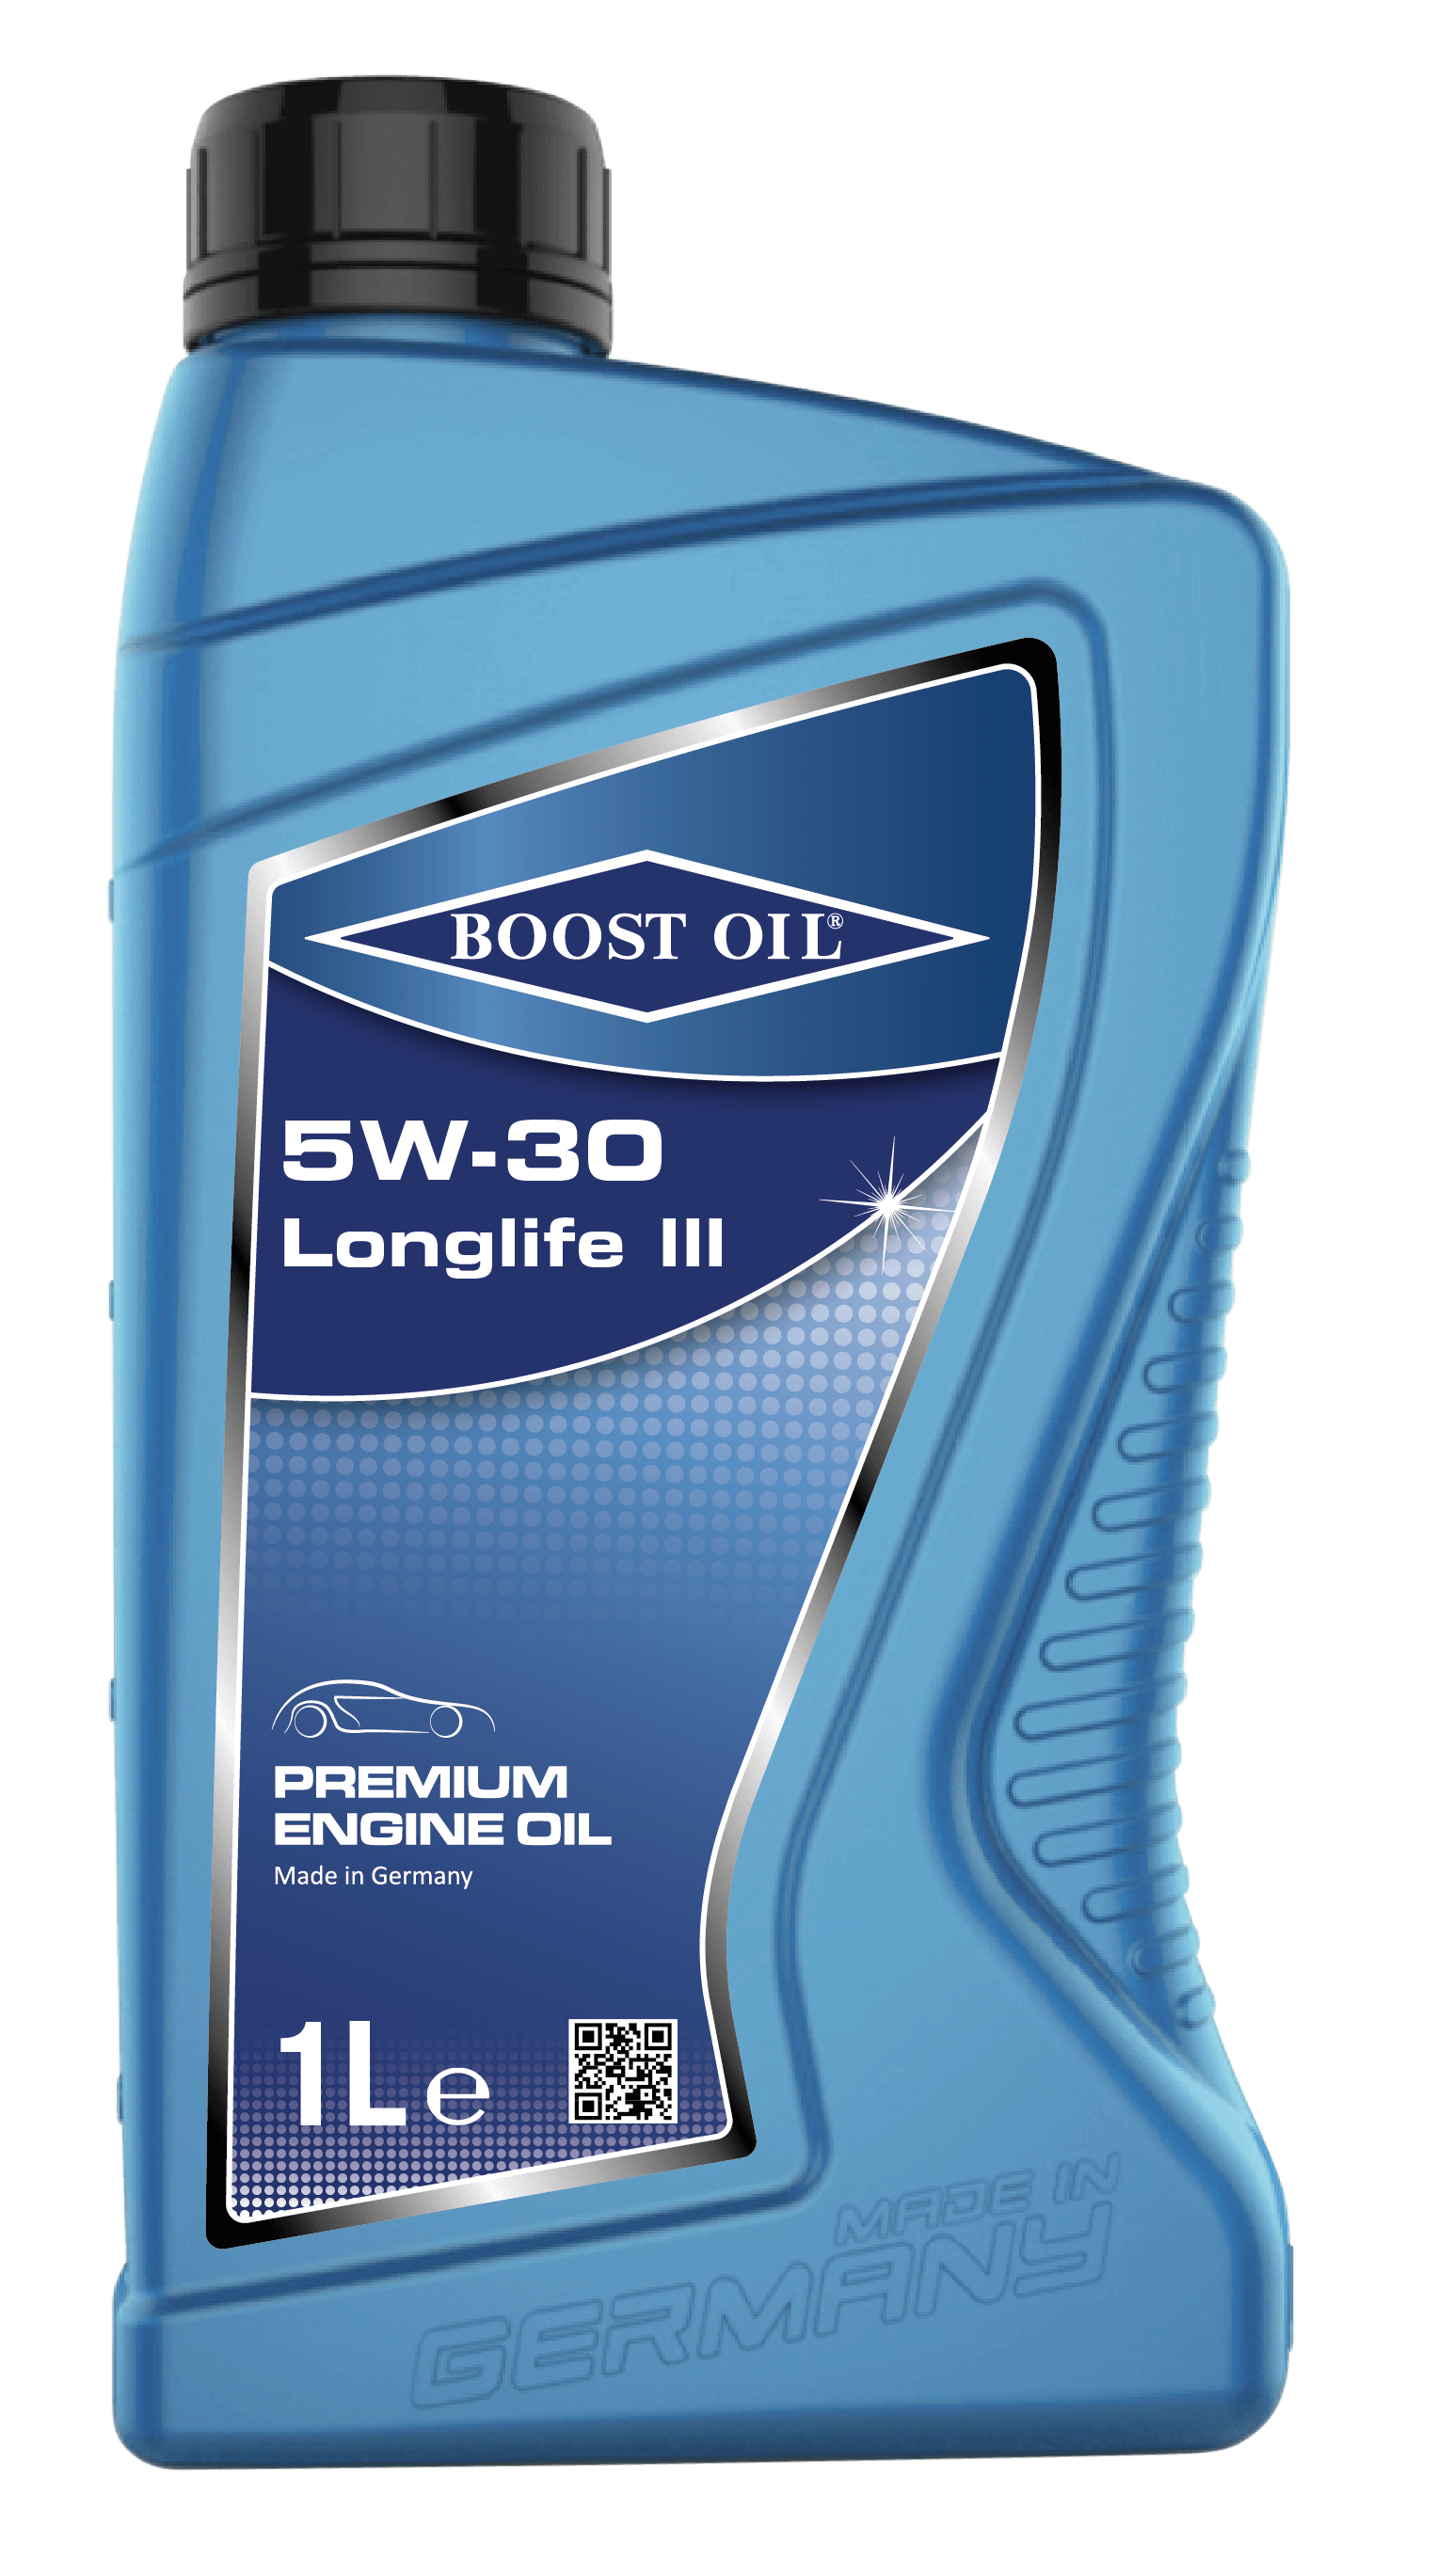 BOOST OIL Longlife III 5W-30 - Boostoil